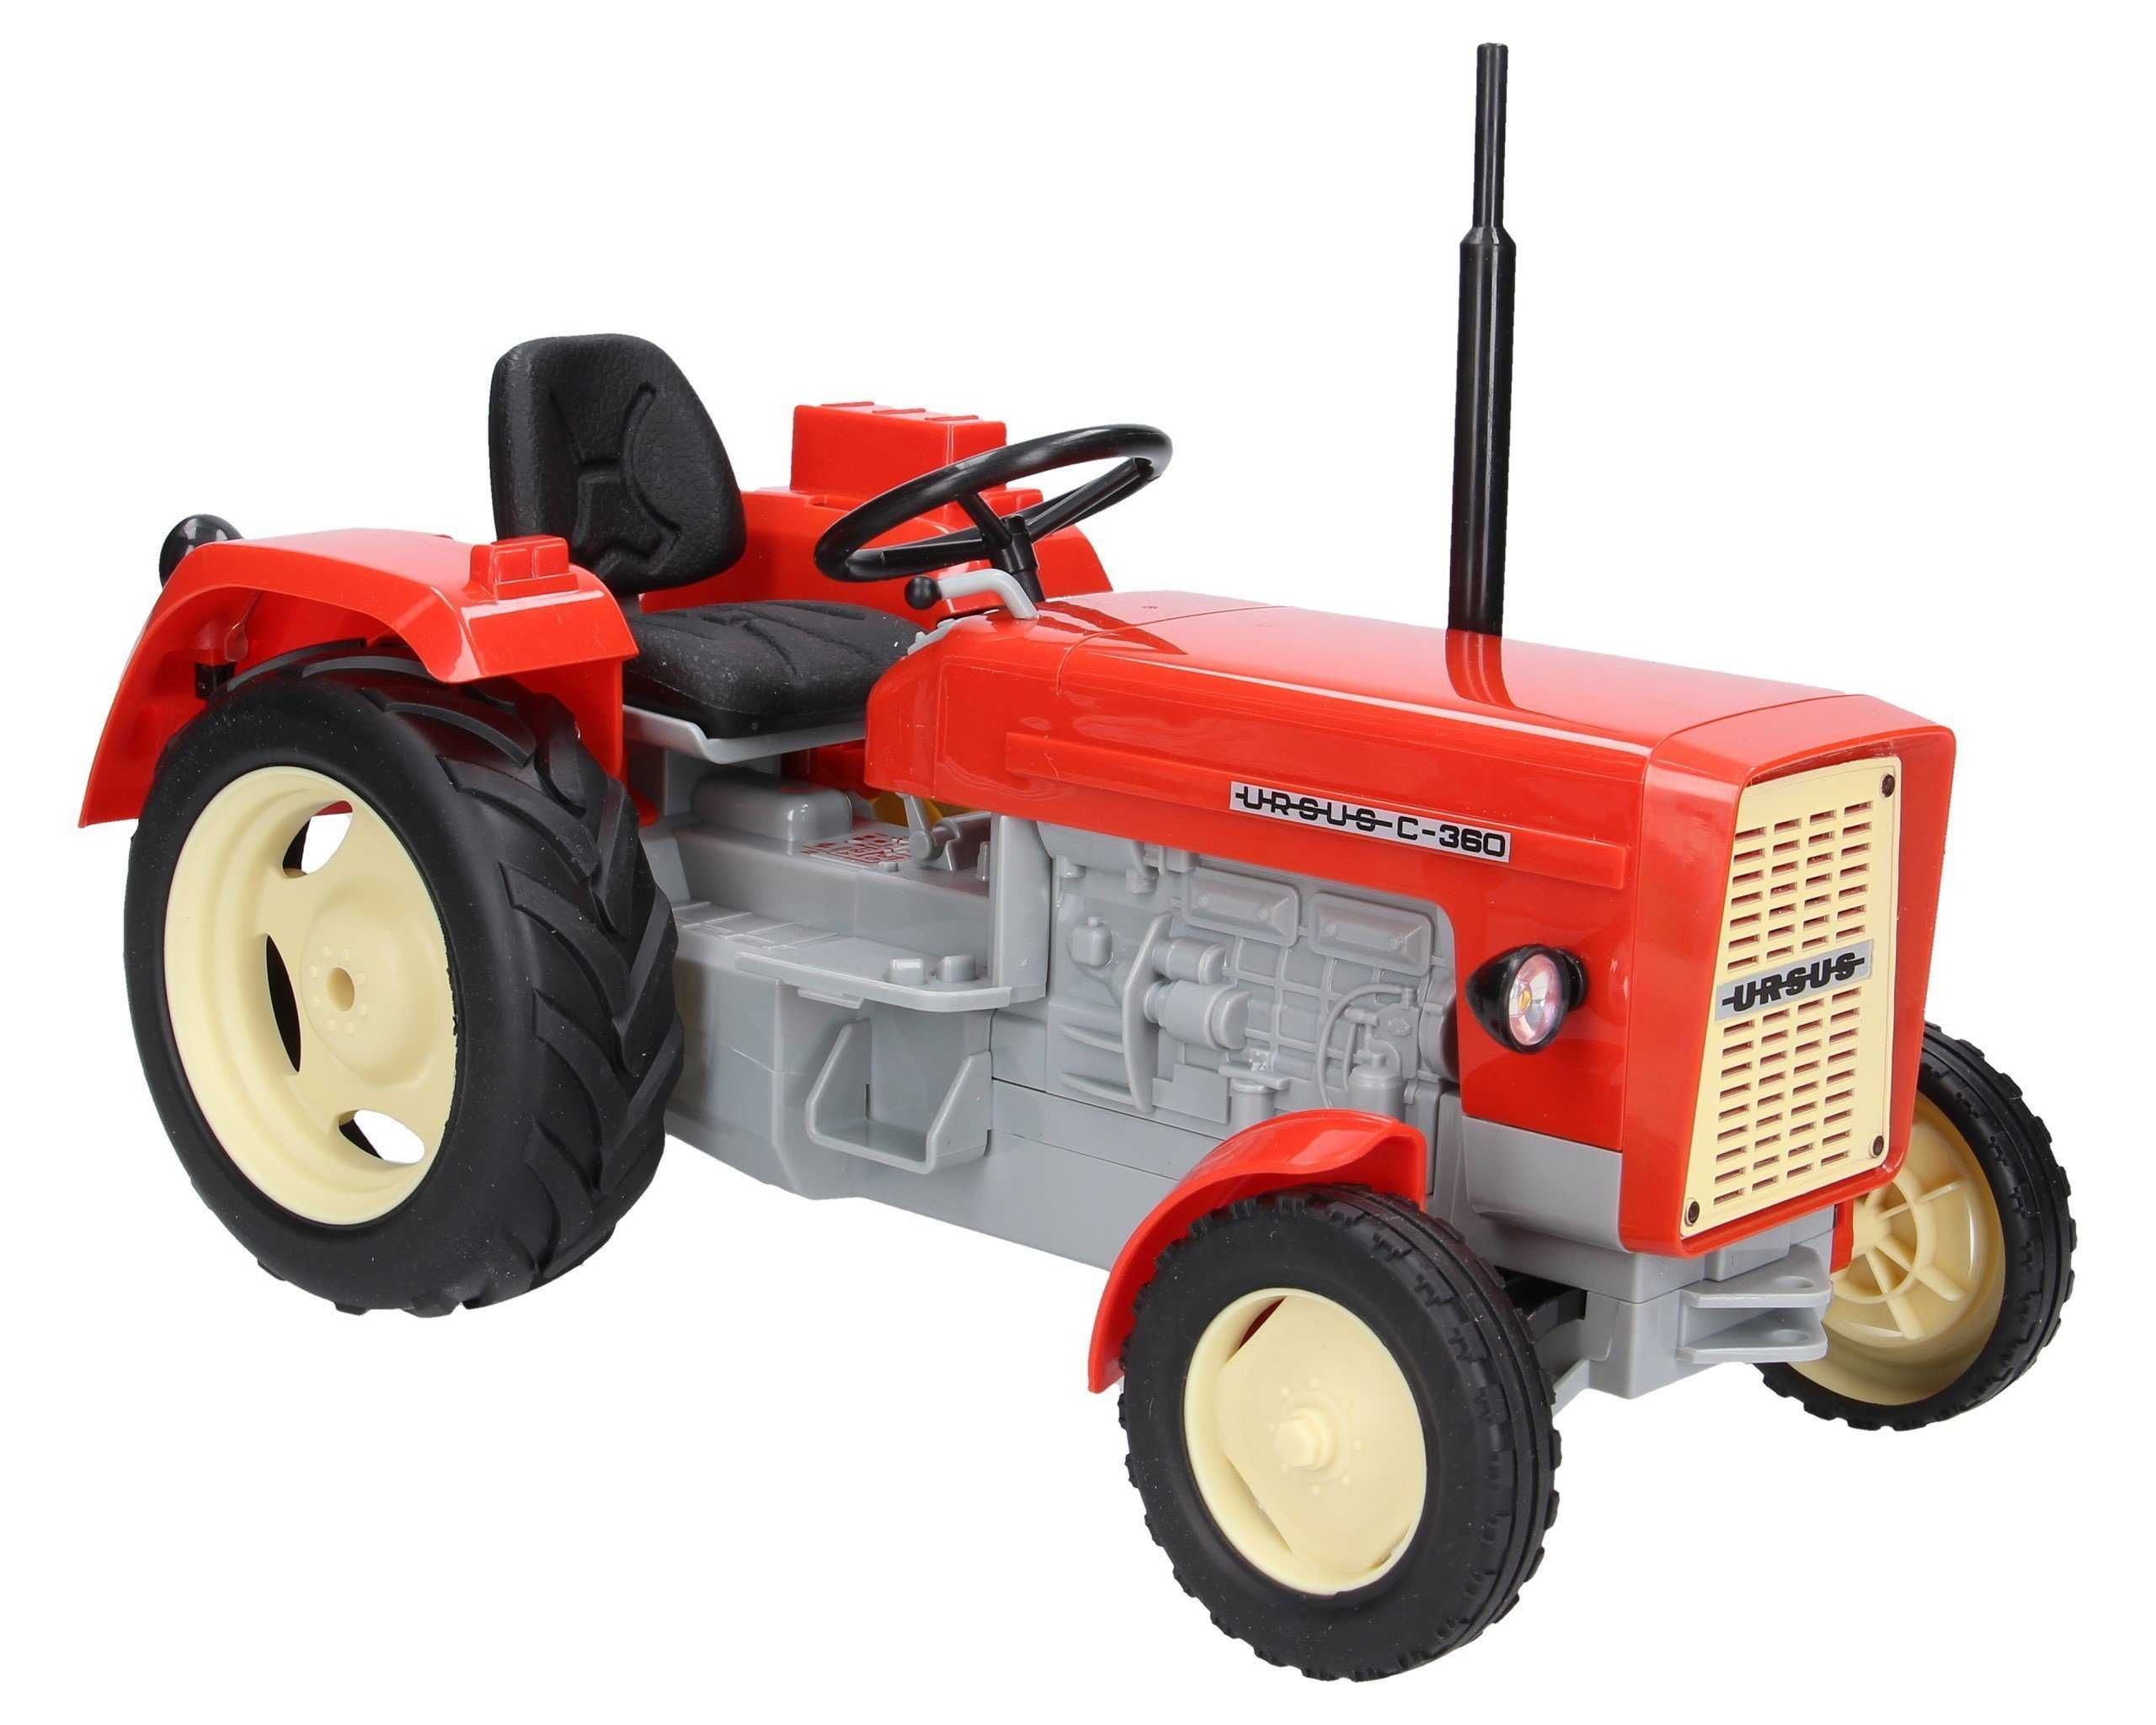 Ciągnik Traktor Traktorek Ursus C360 zabawka sterowana